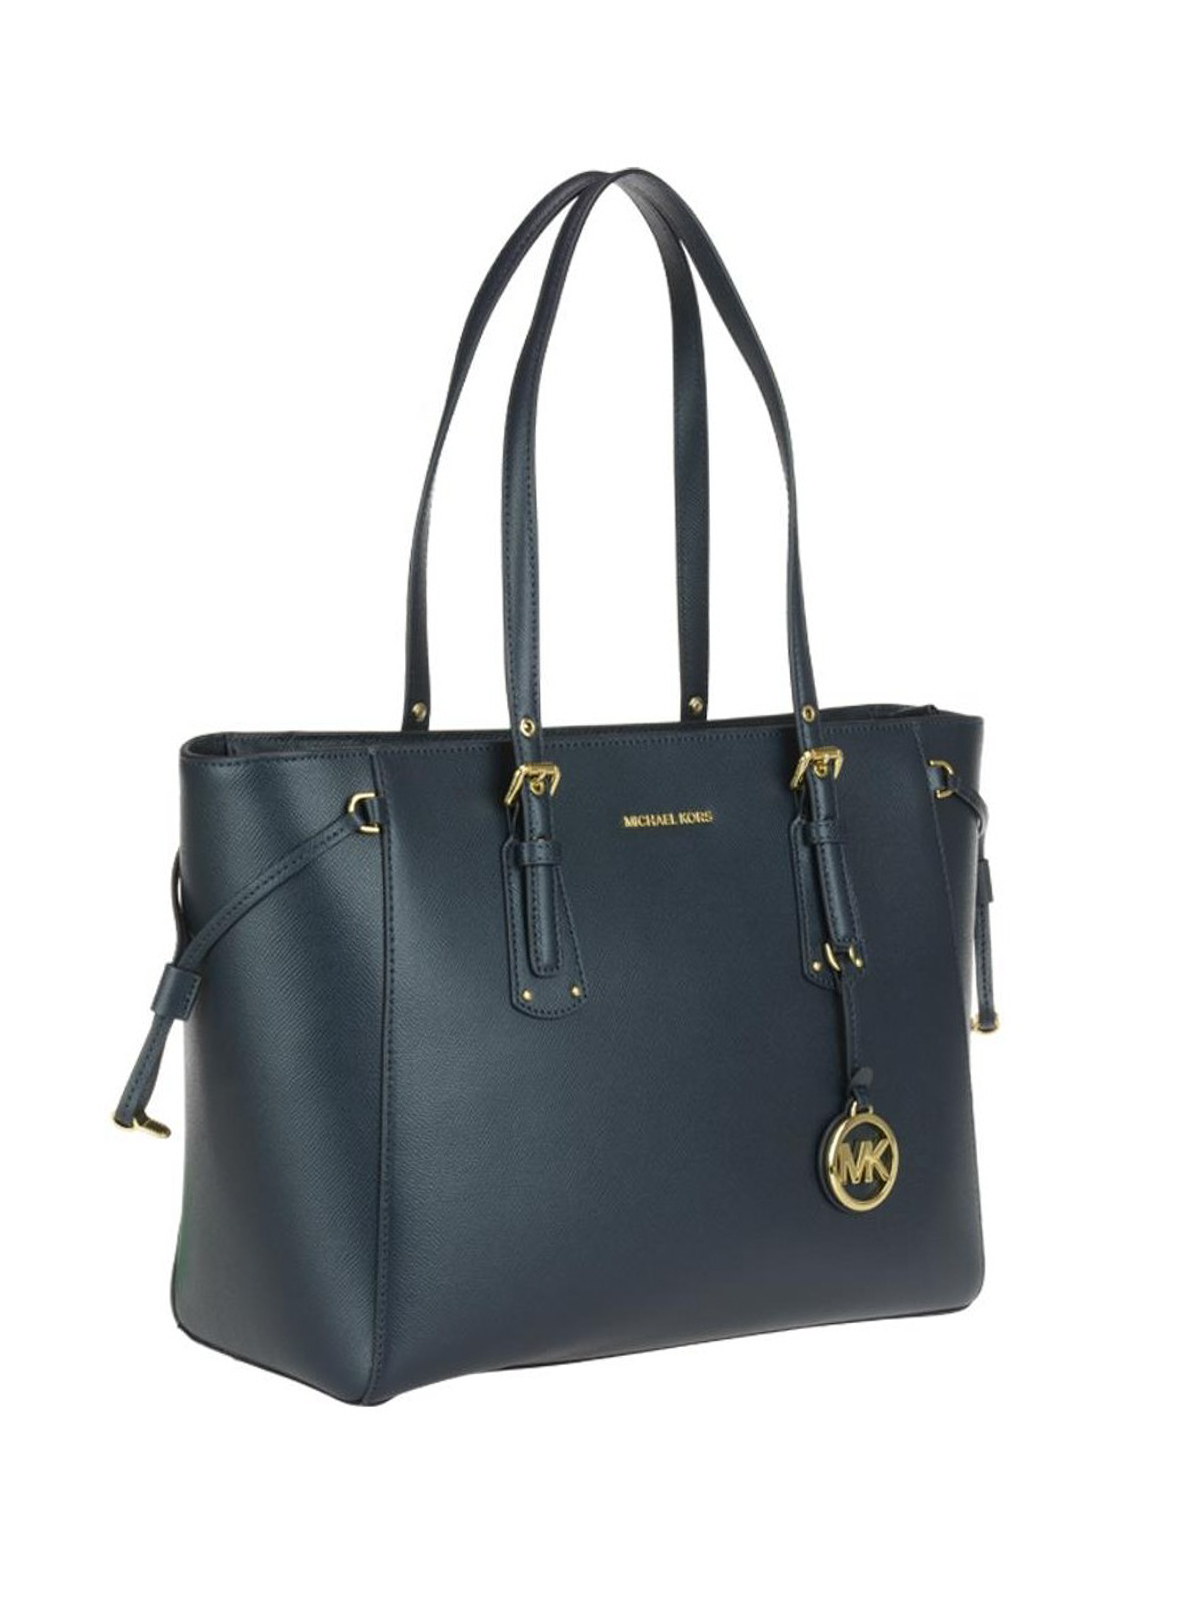 Totes bags Michael Kors - Voyager blue leather medium shopper